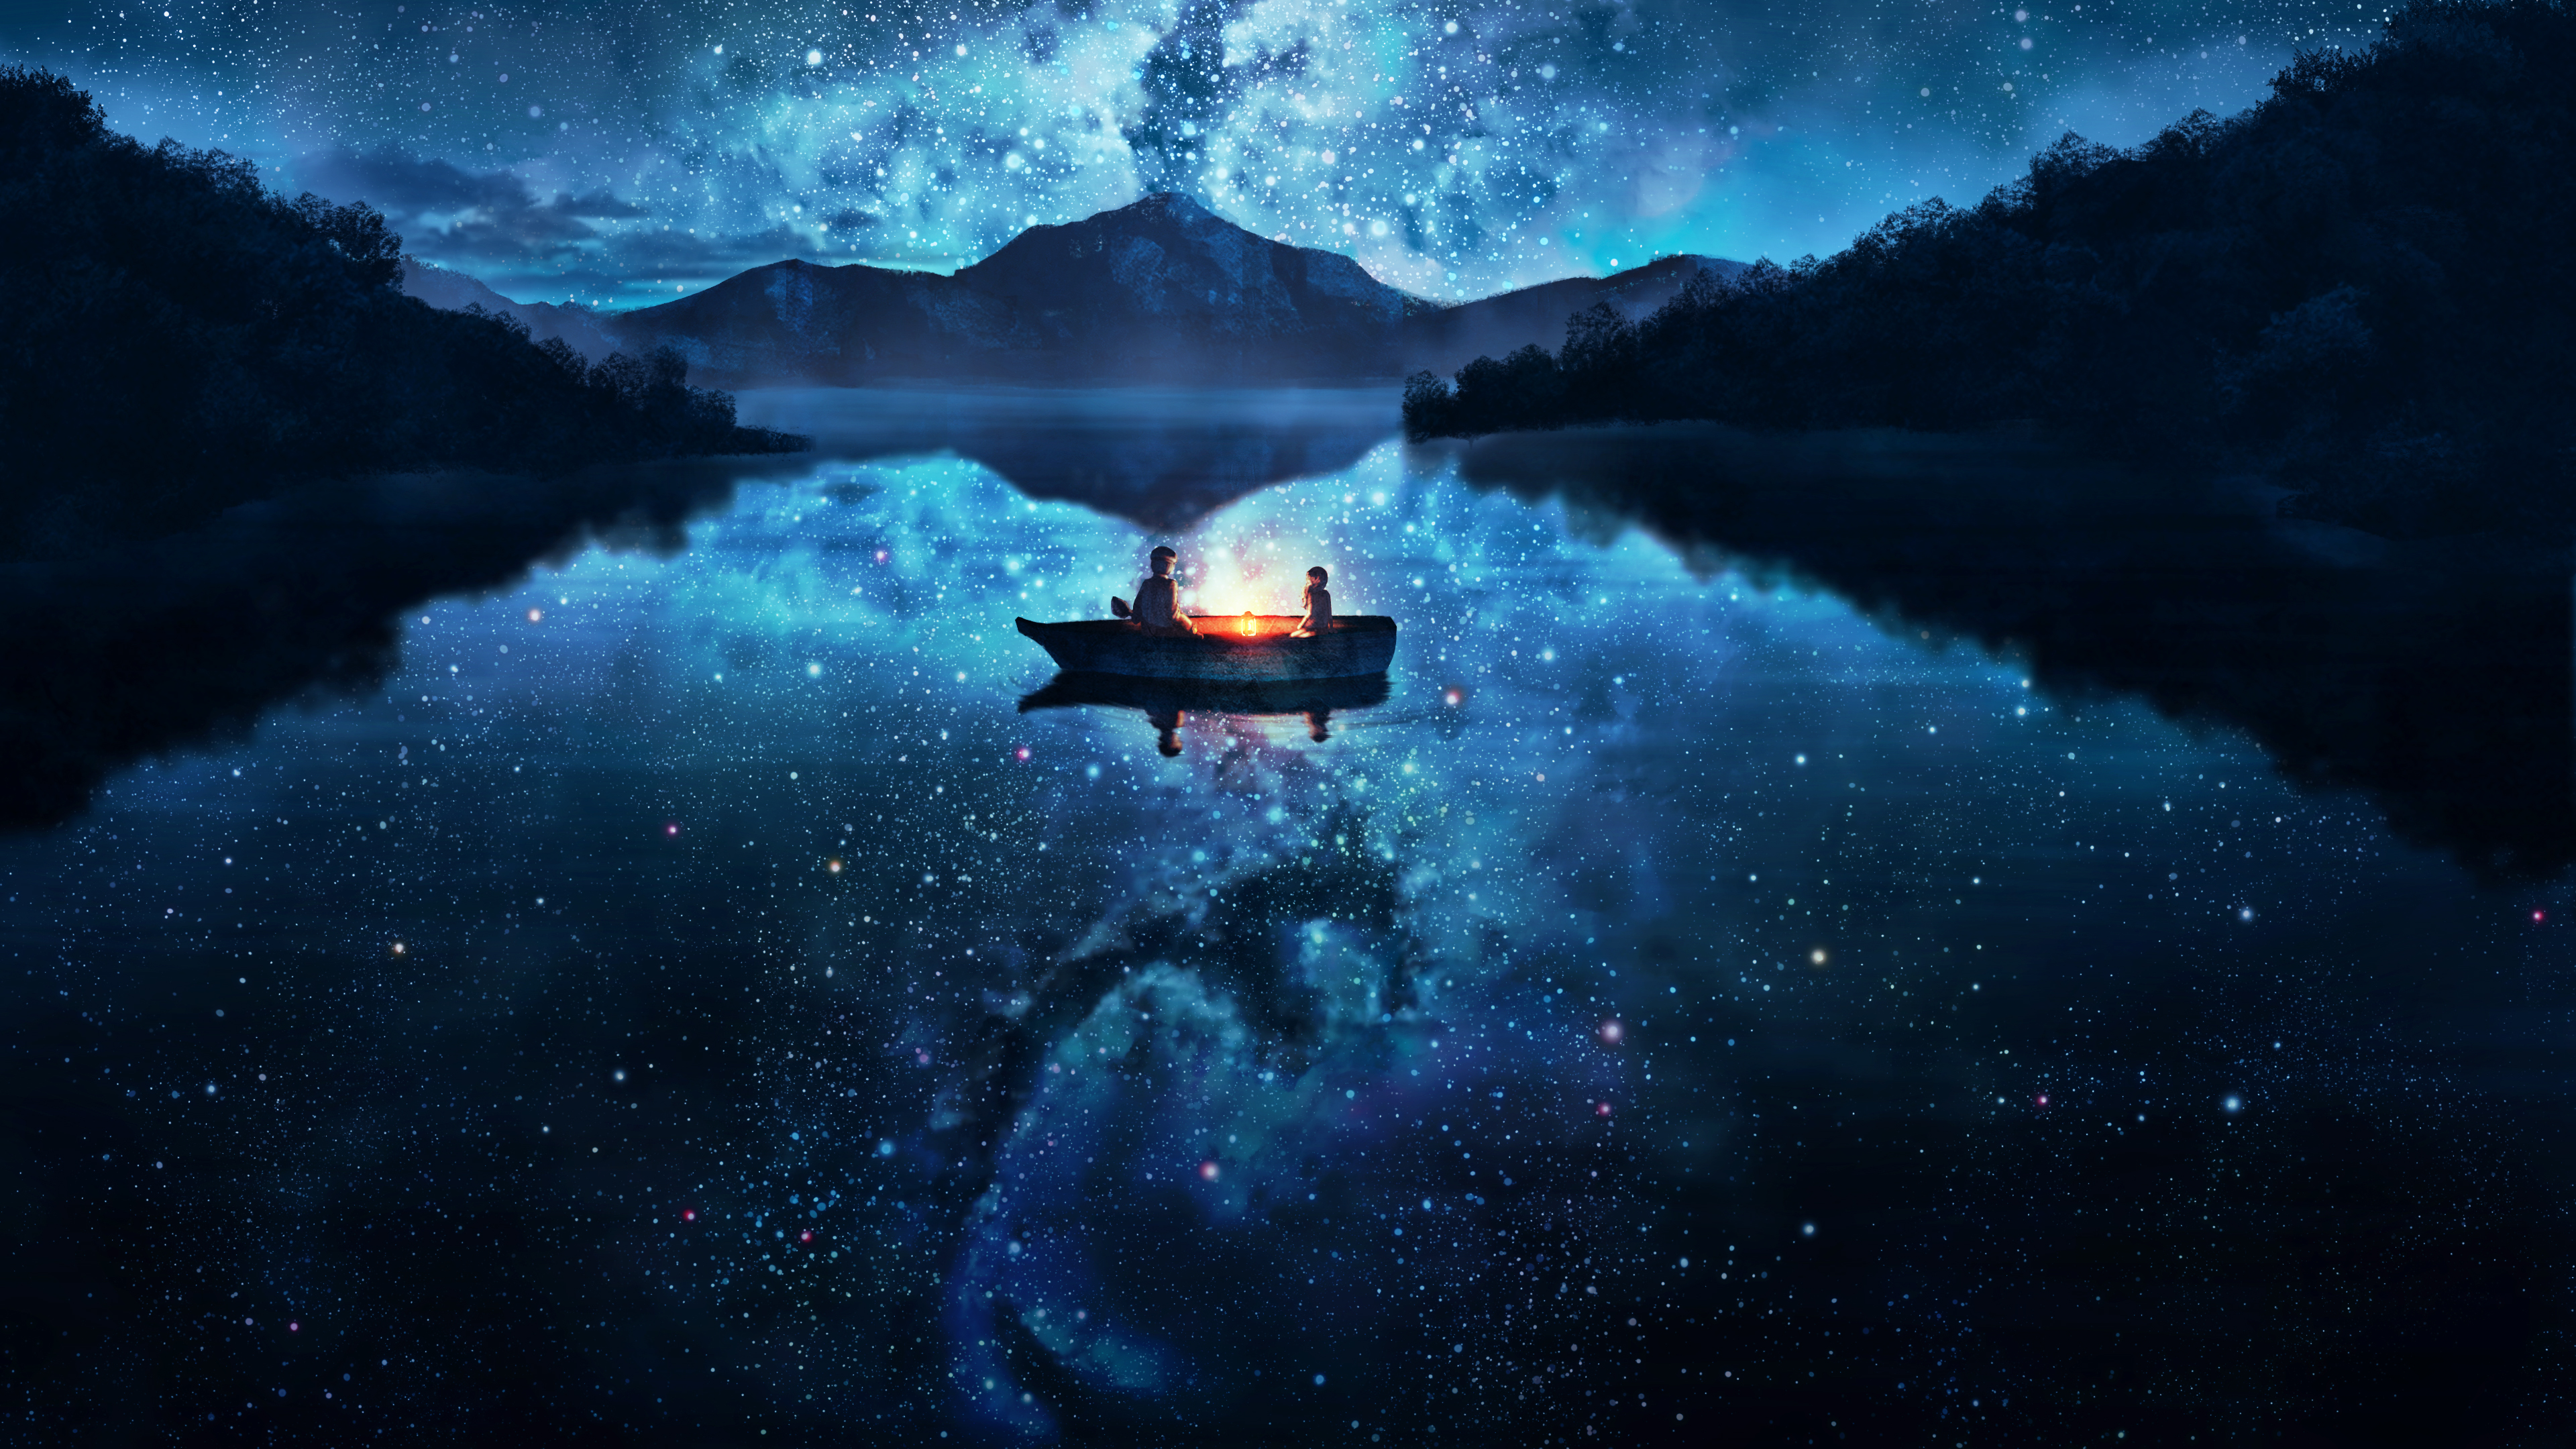 anime, night, reflection, starry sky, boat, lake, scenic